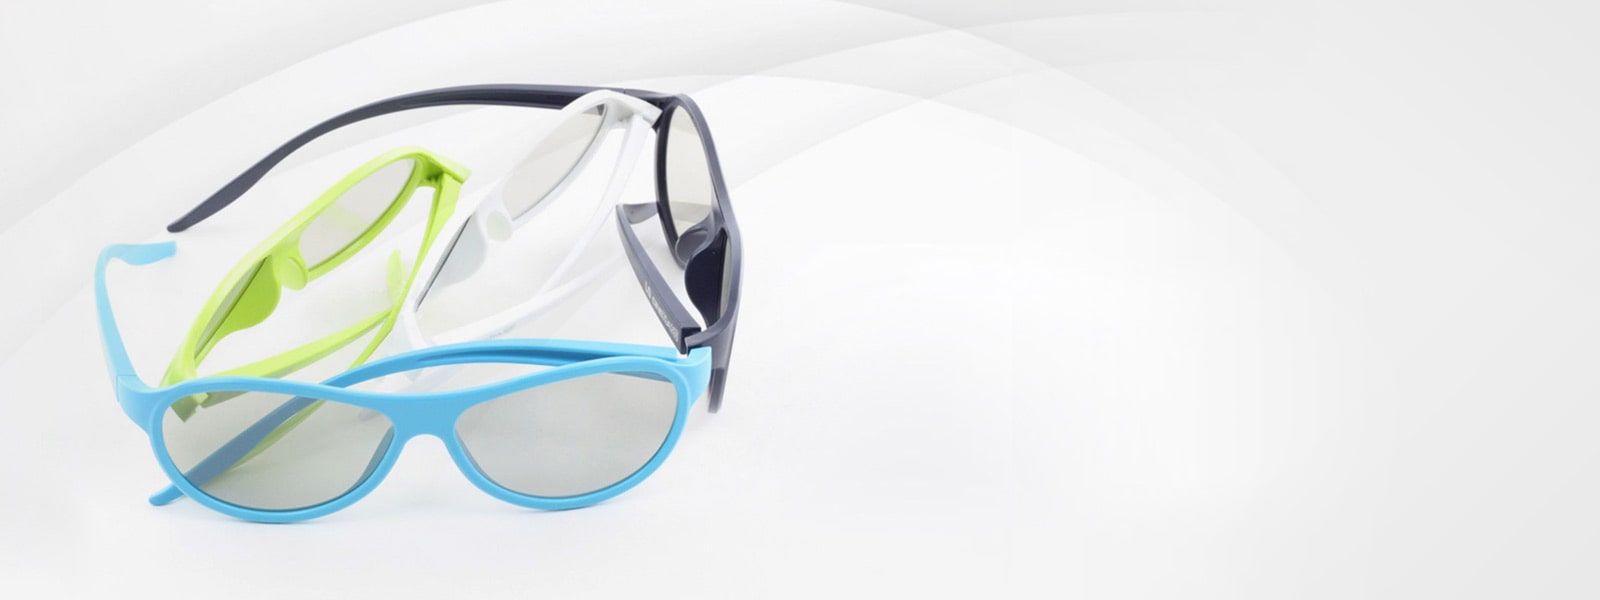 Kidz 3d Porn - LG 3D TV Glasses for Passive 3D Televisions | LG USA